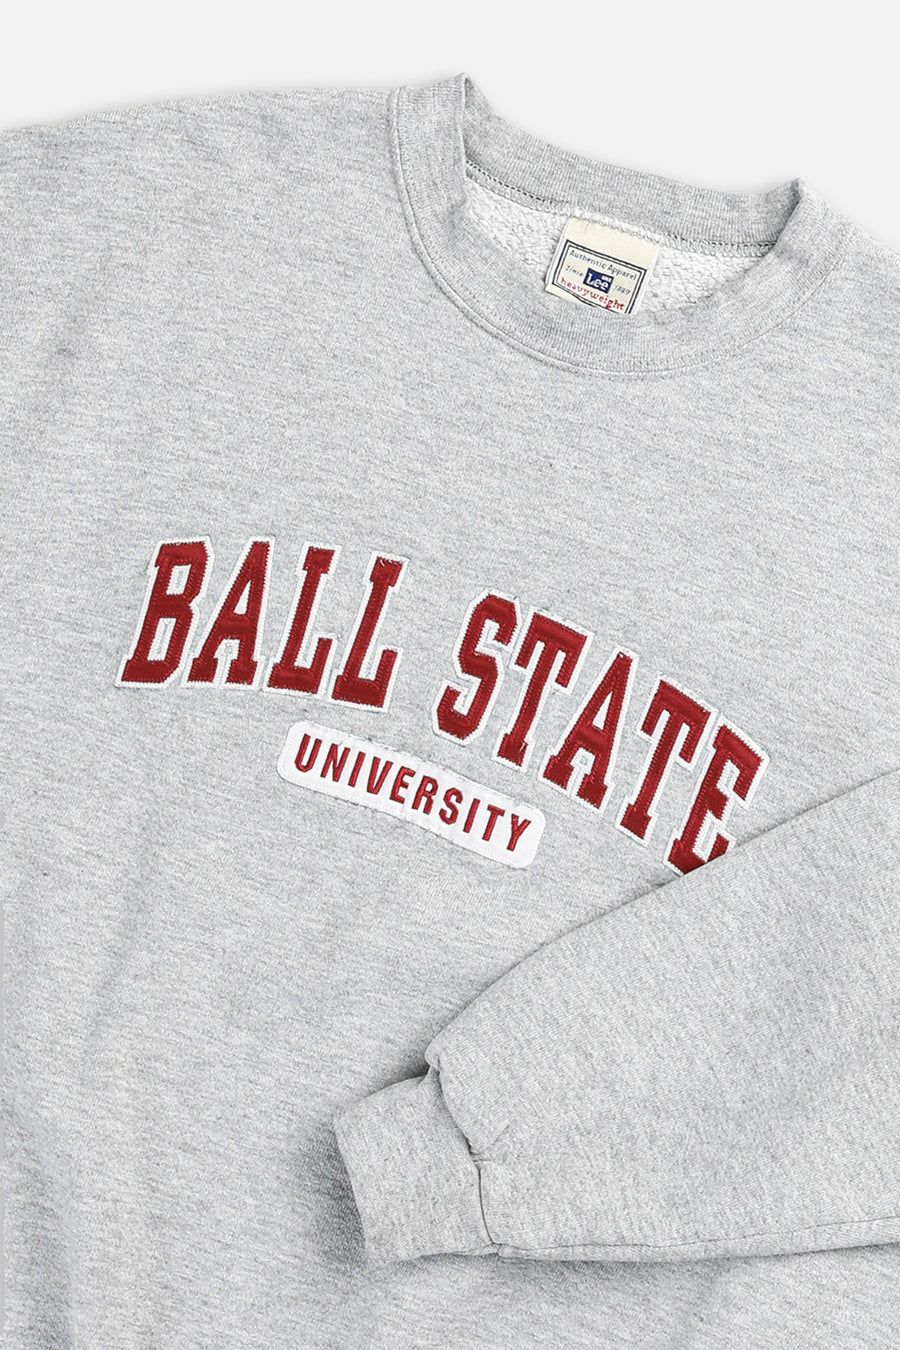 Vintage Ball State University Sweatshirt - M